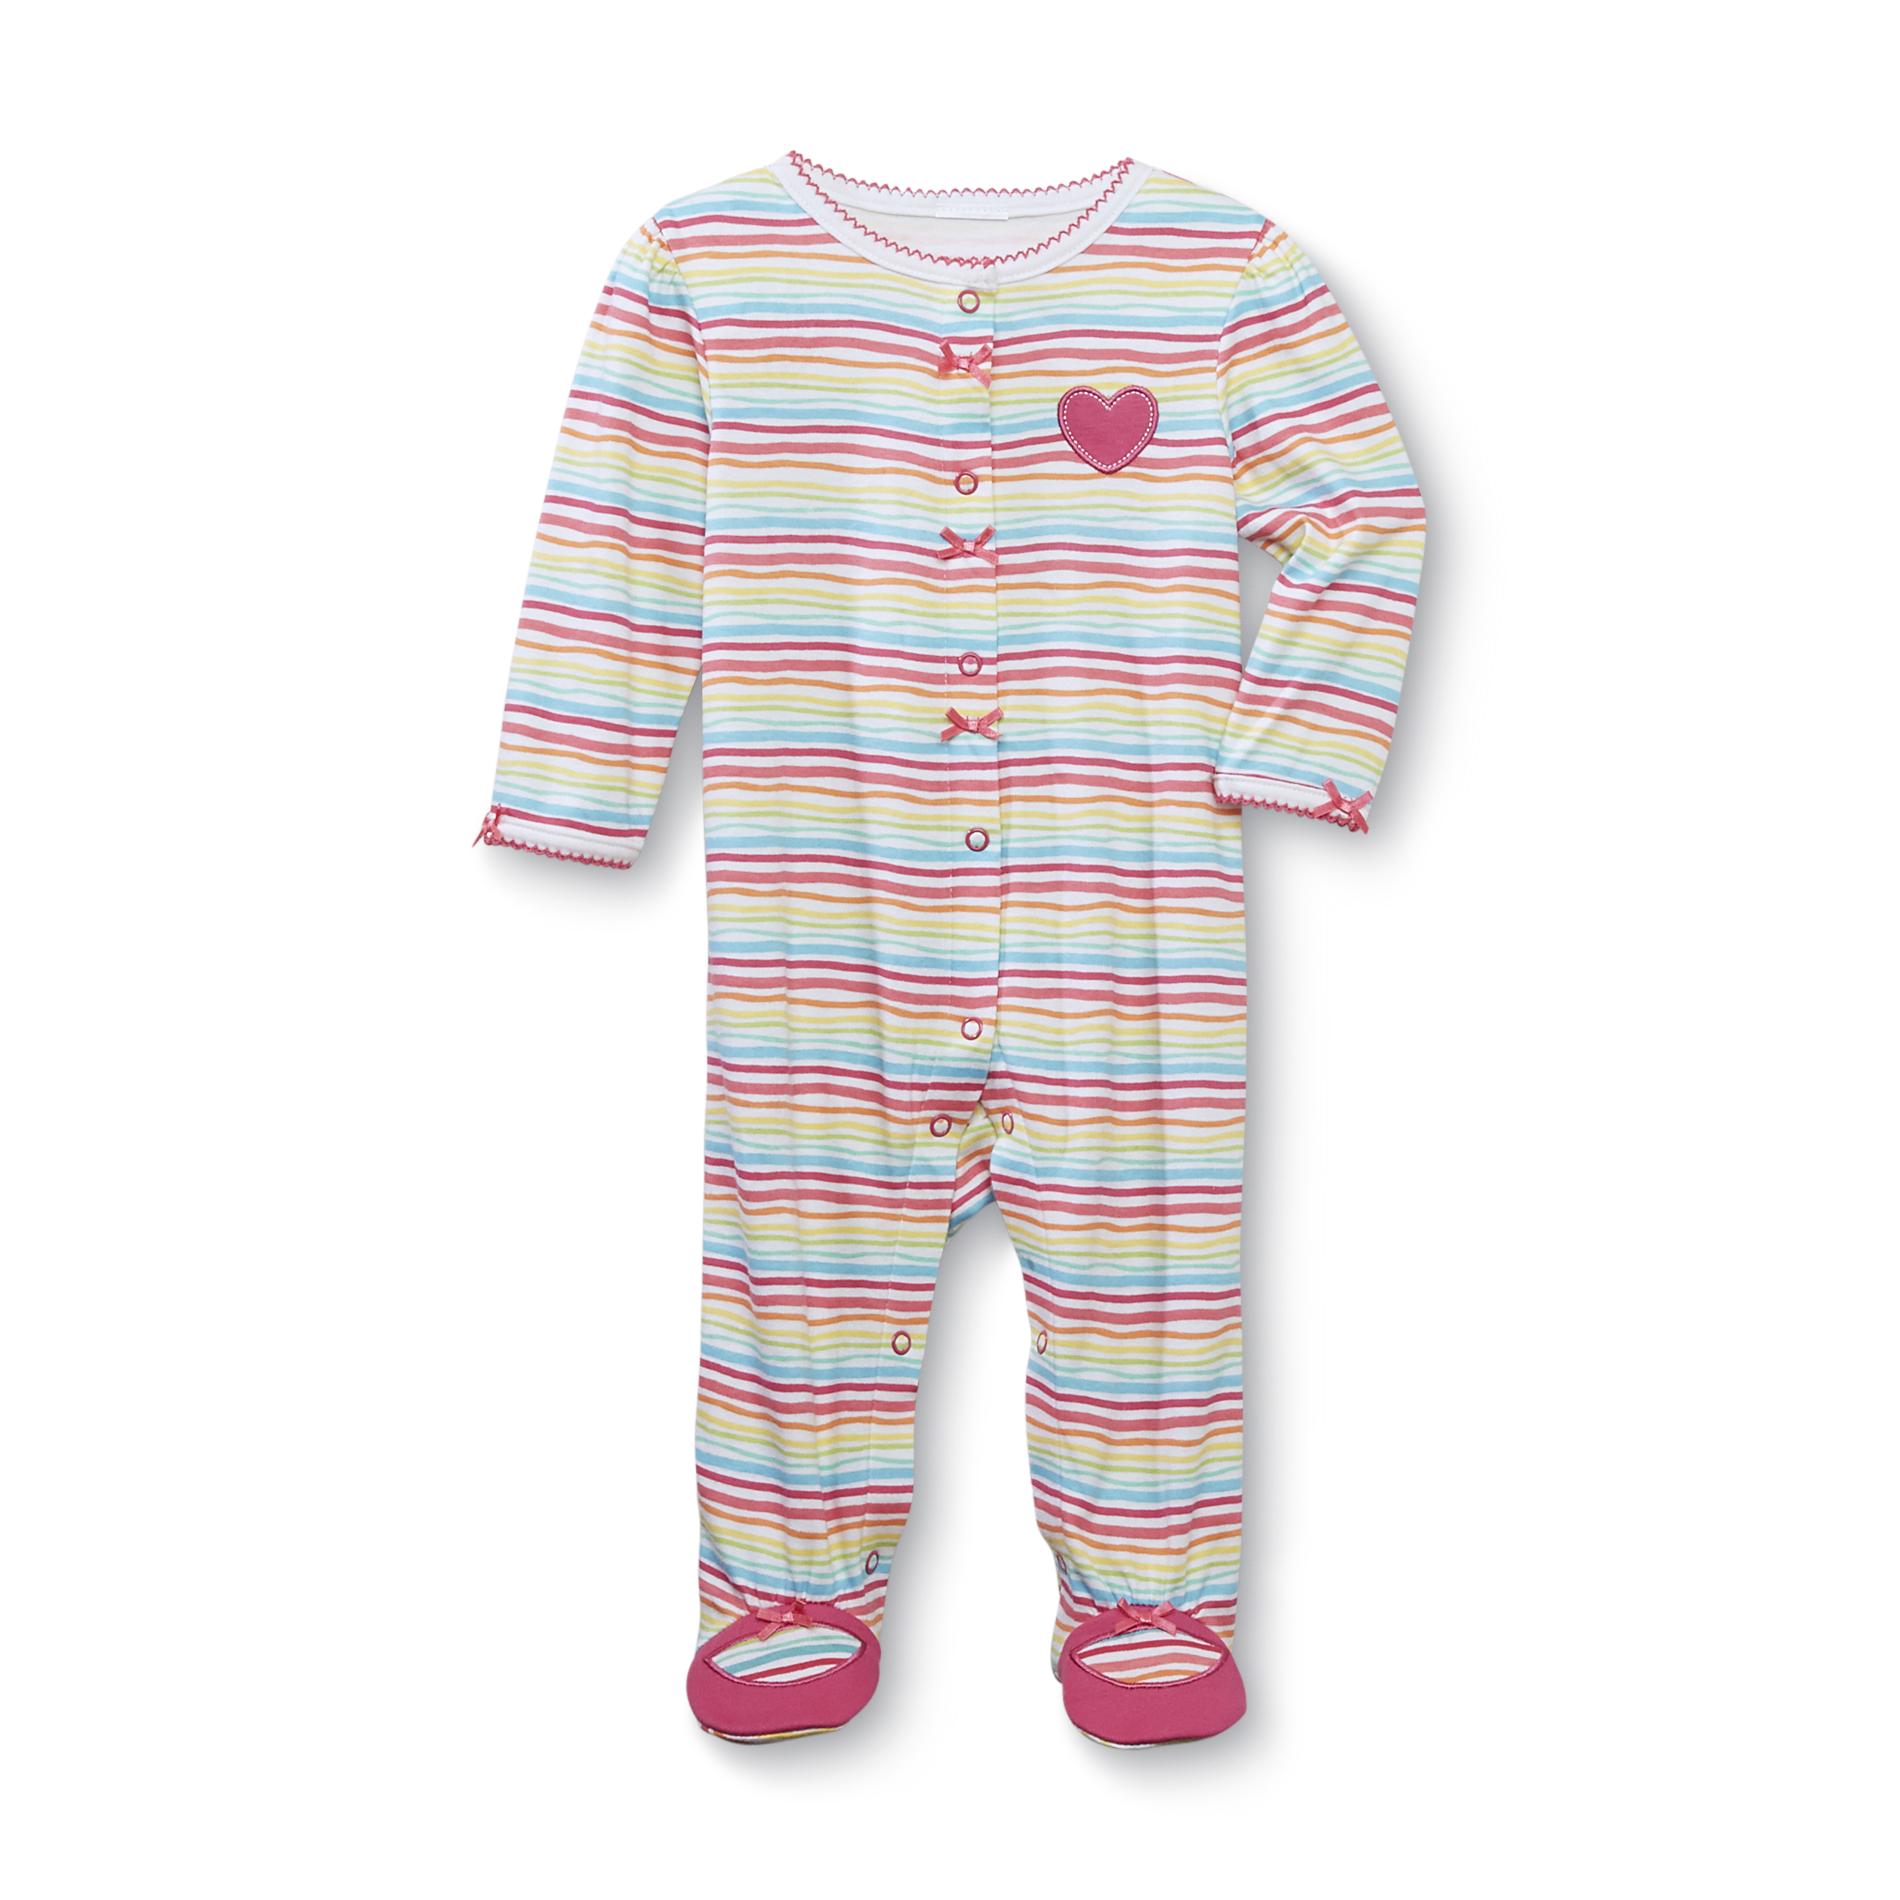 Small Wonders Newborn Girl's Sleeper Pajamas - Striped